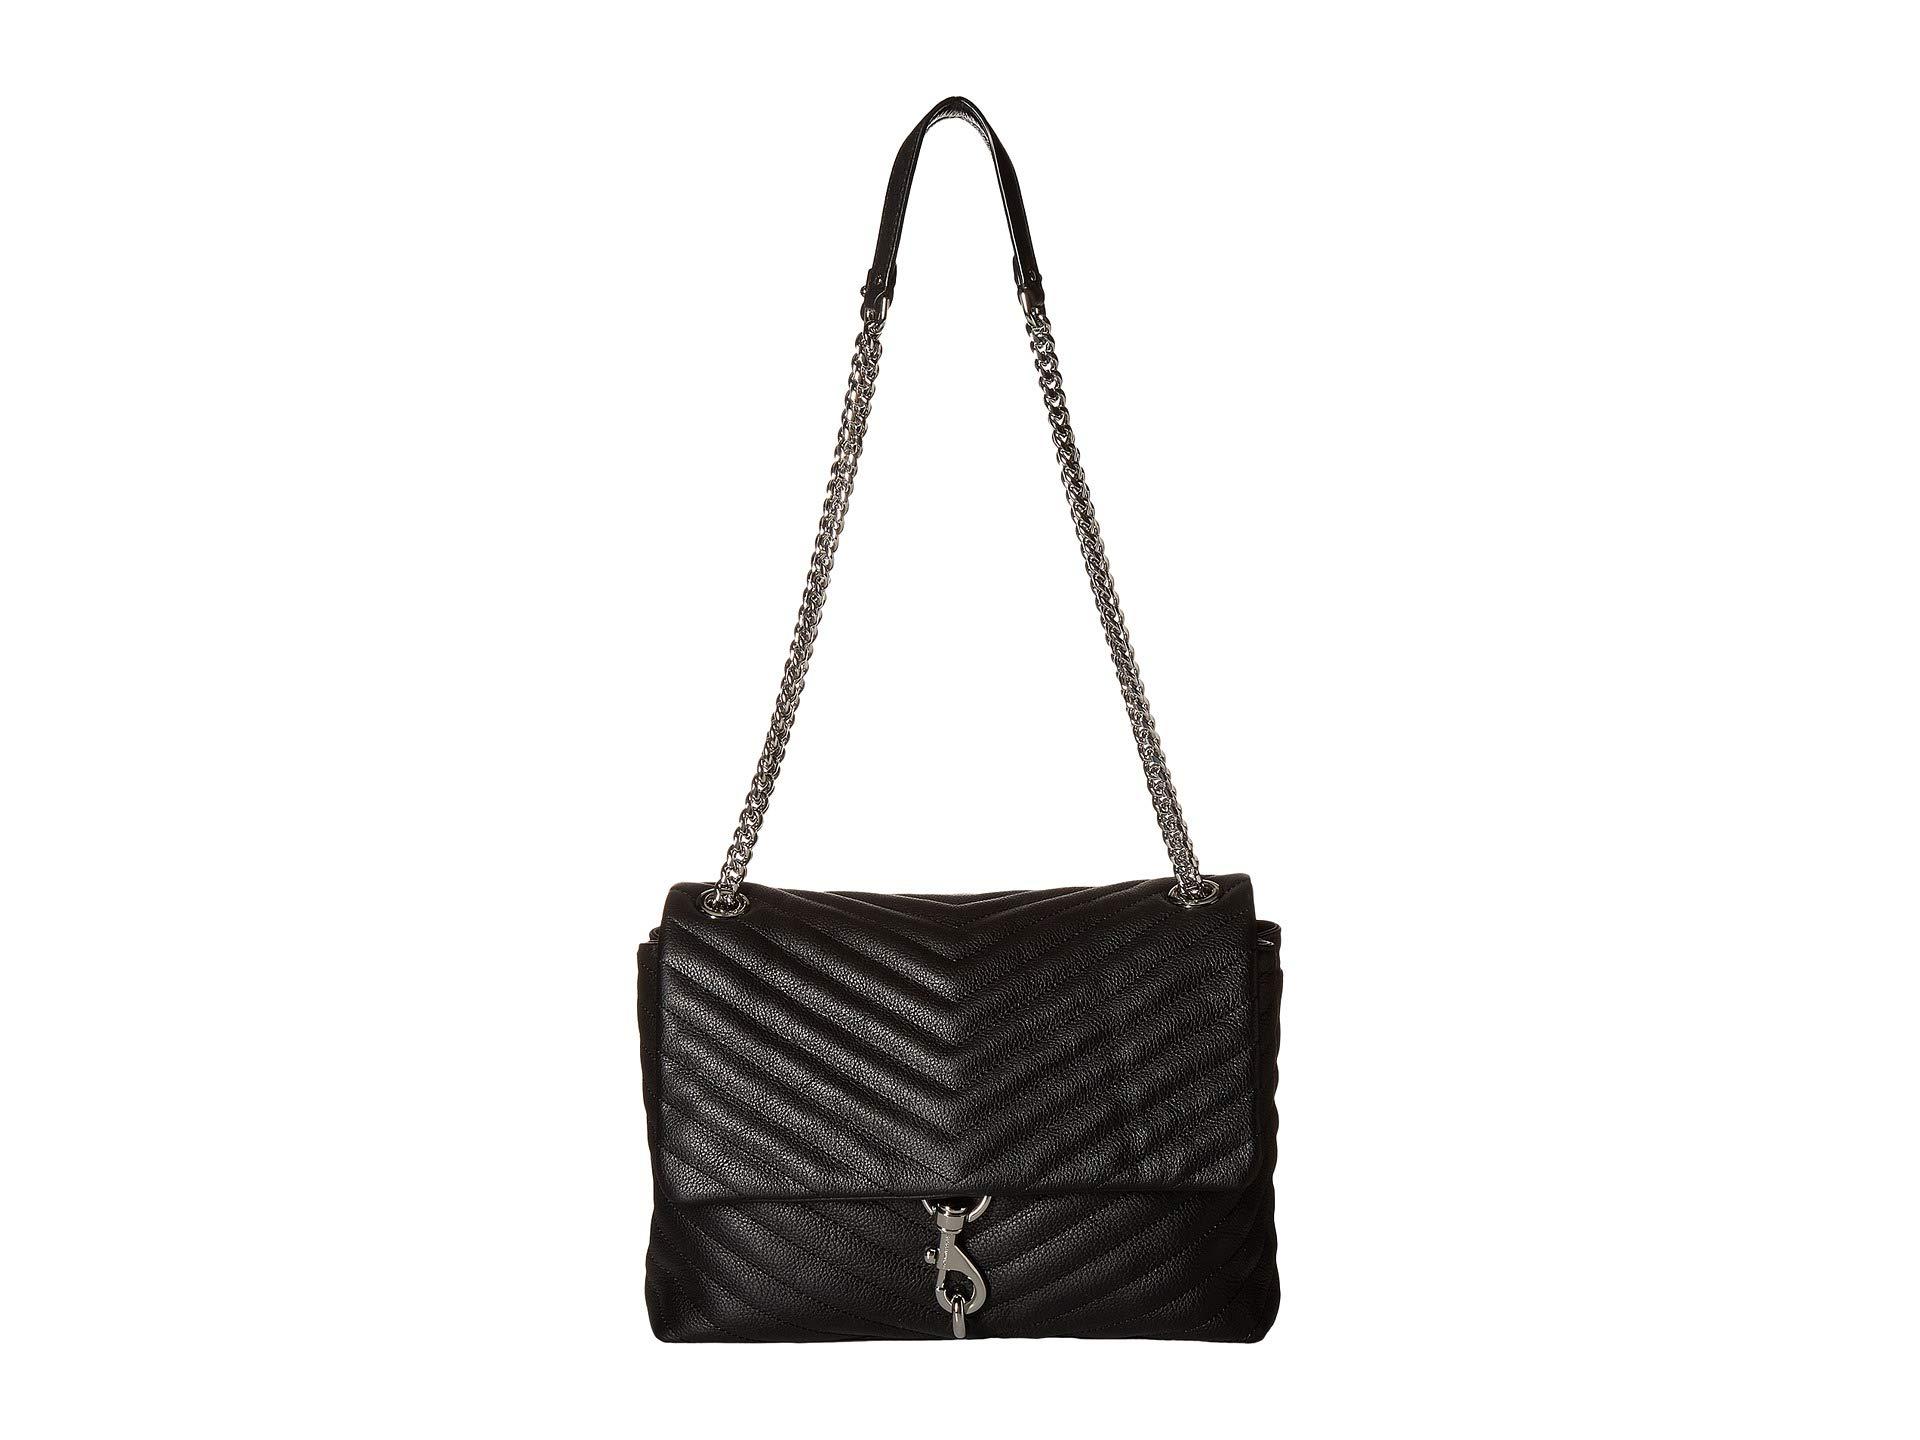 Rebecca Minkoff Leather Edie Flap Shoulder Bag in Black - Lyst